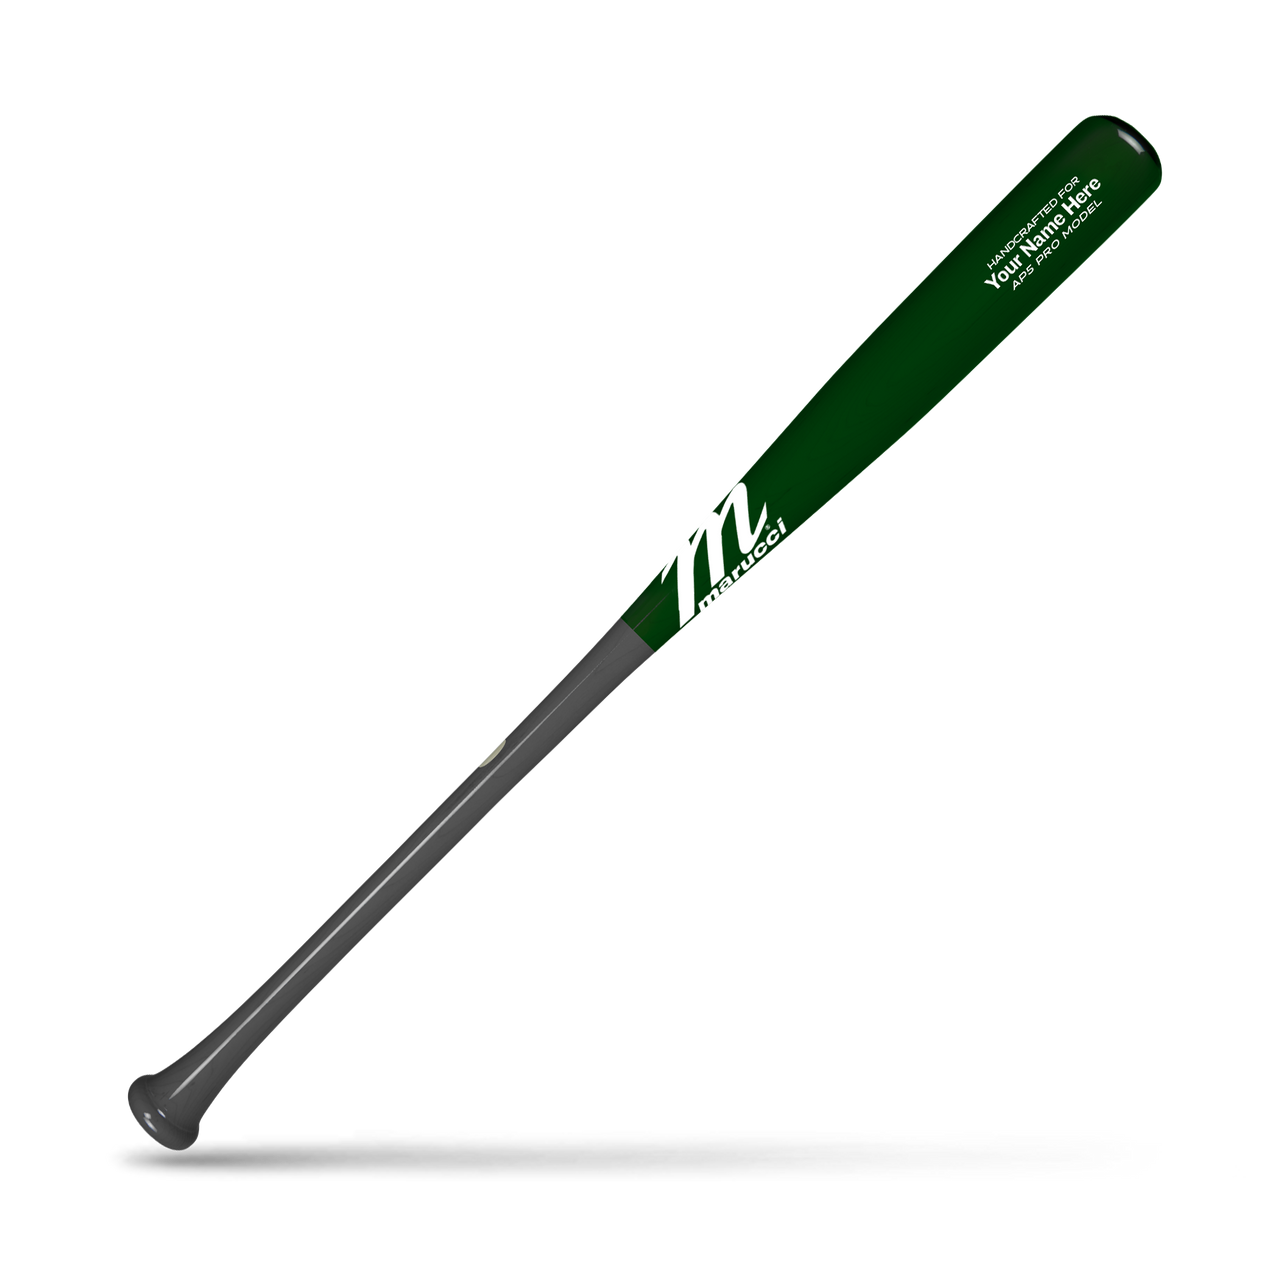 CBAP5 Youth Pro 2.25 Wood Baseball Bat- Pink - Cooperstown Bat Company